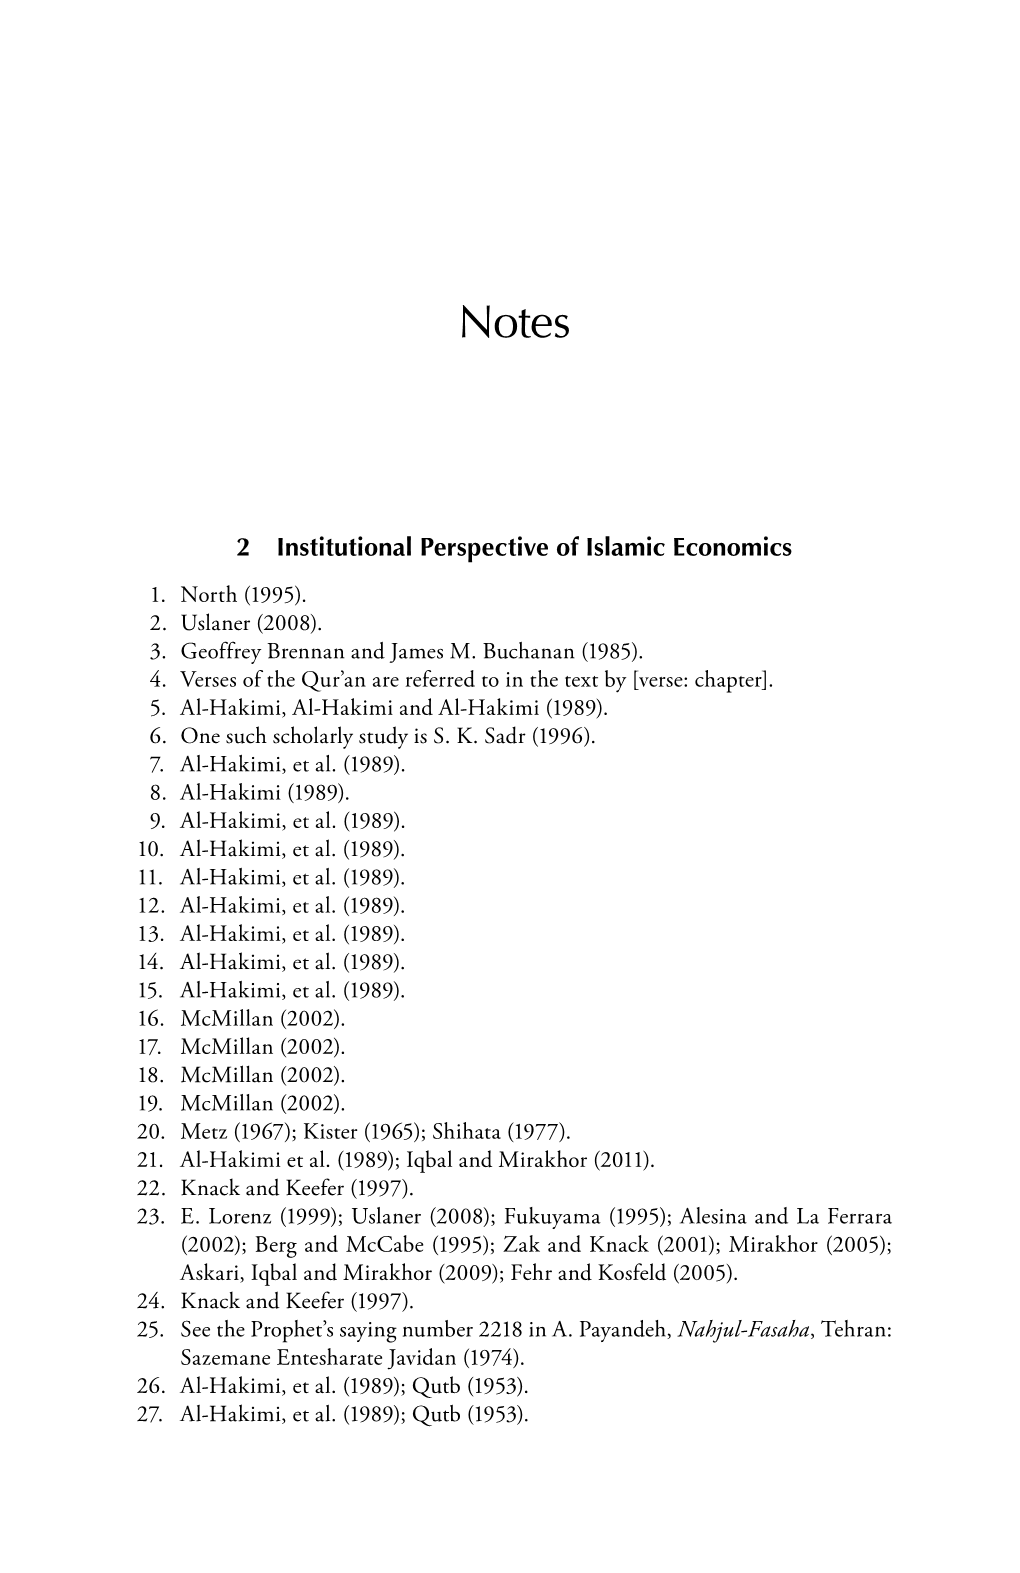 2 Institutional Perspective of Islamic Economics